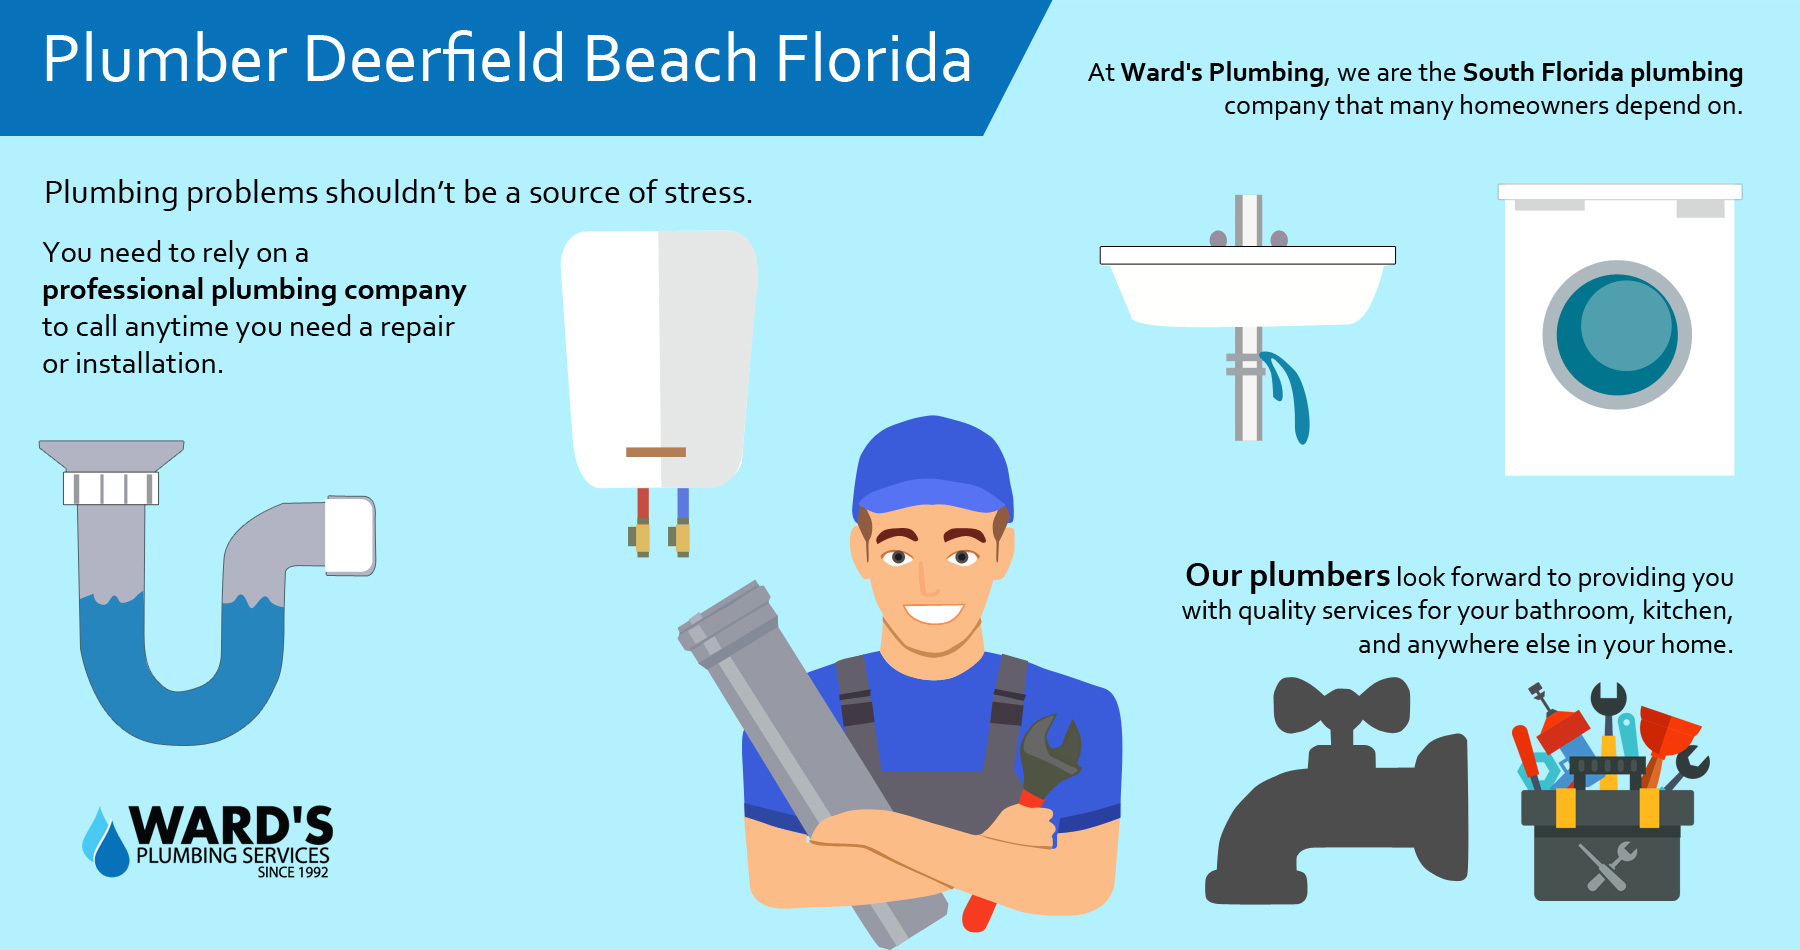 Ward’s Plumbing Services – A Team of Professional Plumbers in Deerfield Beach